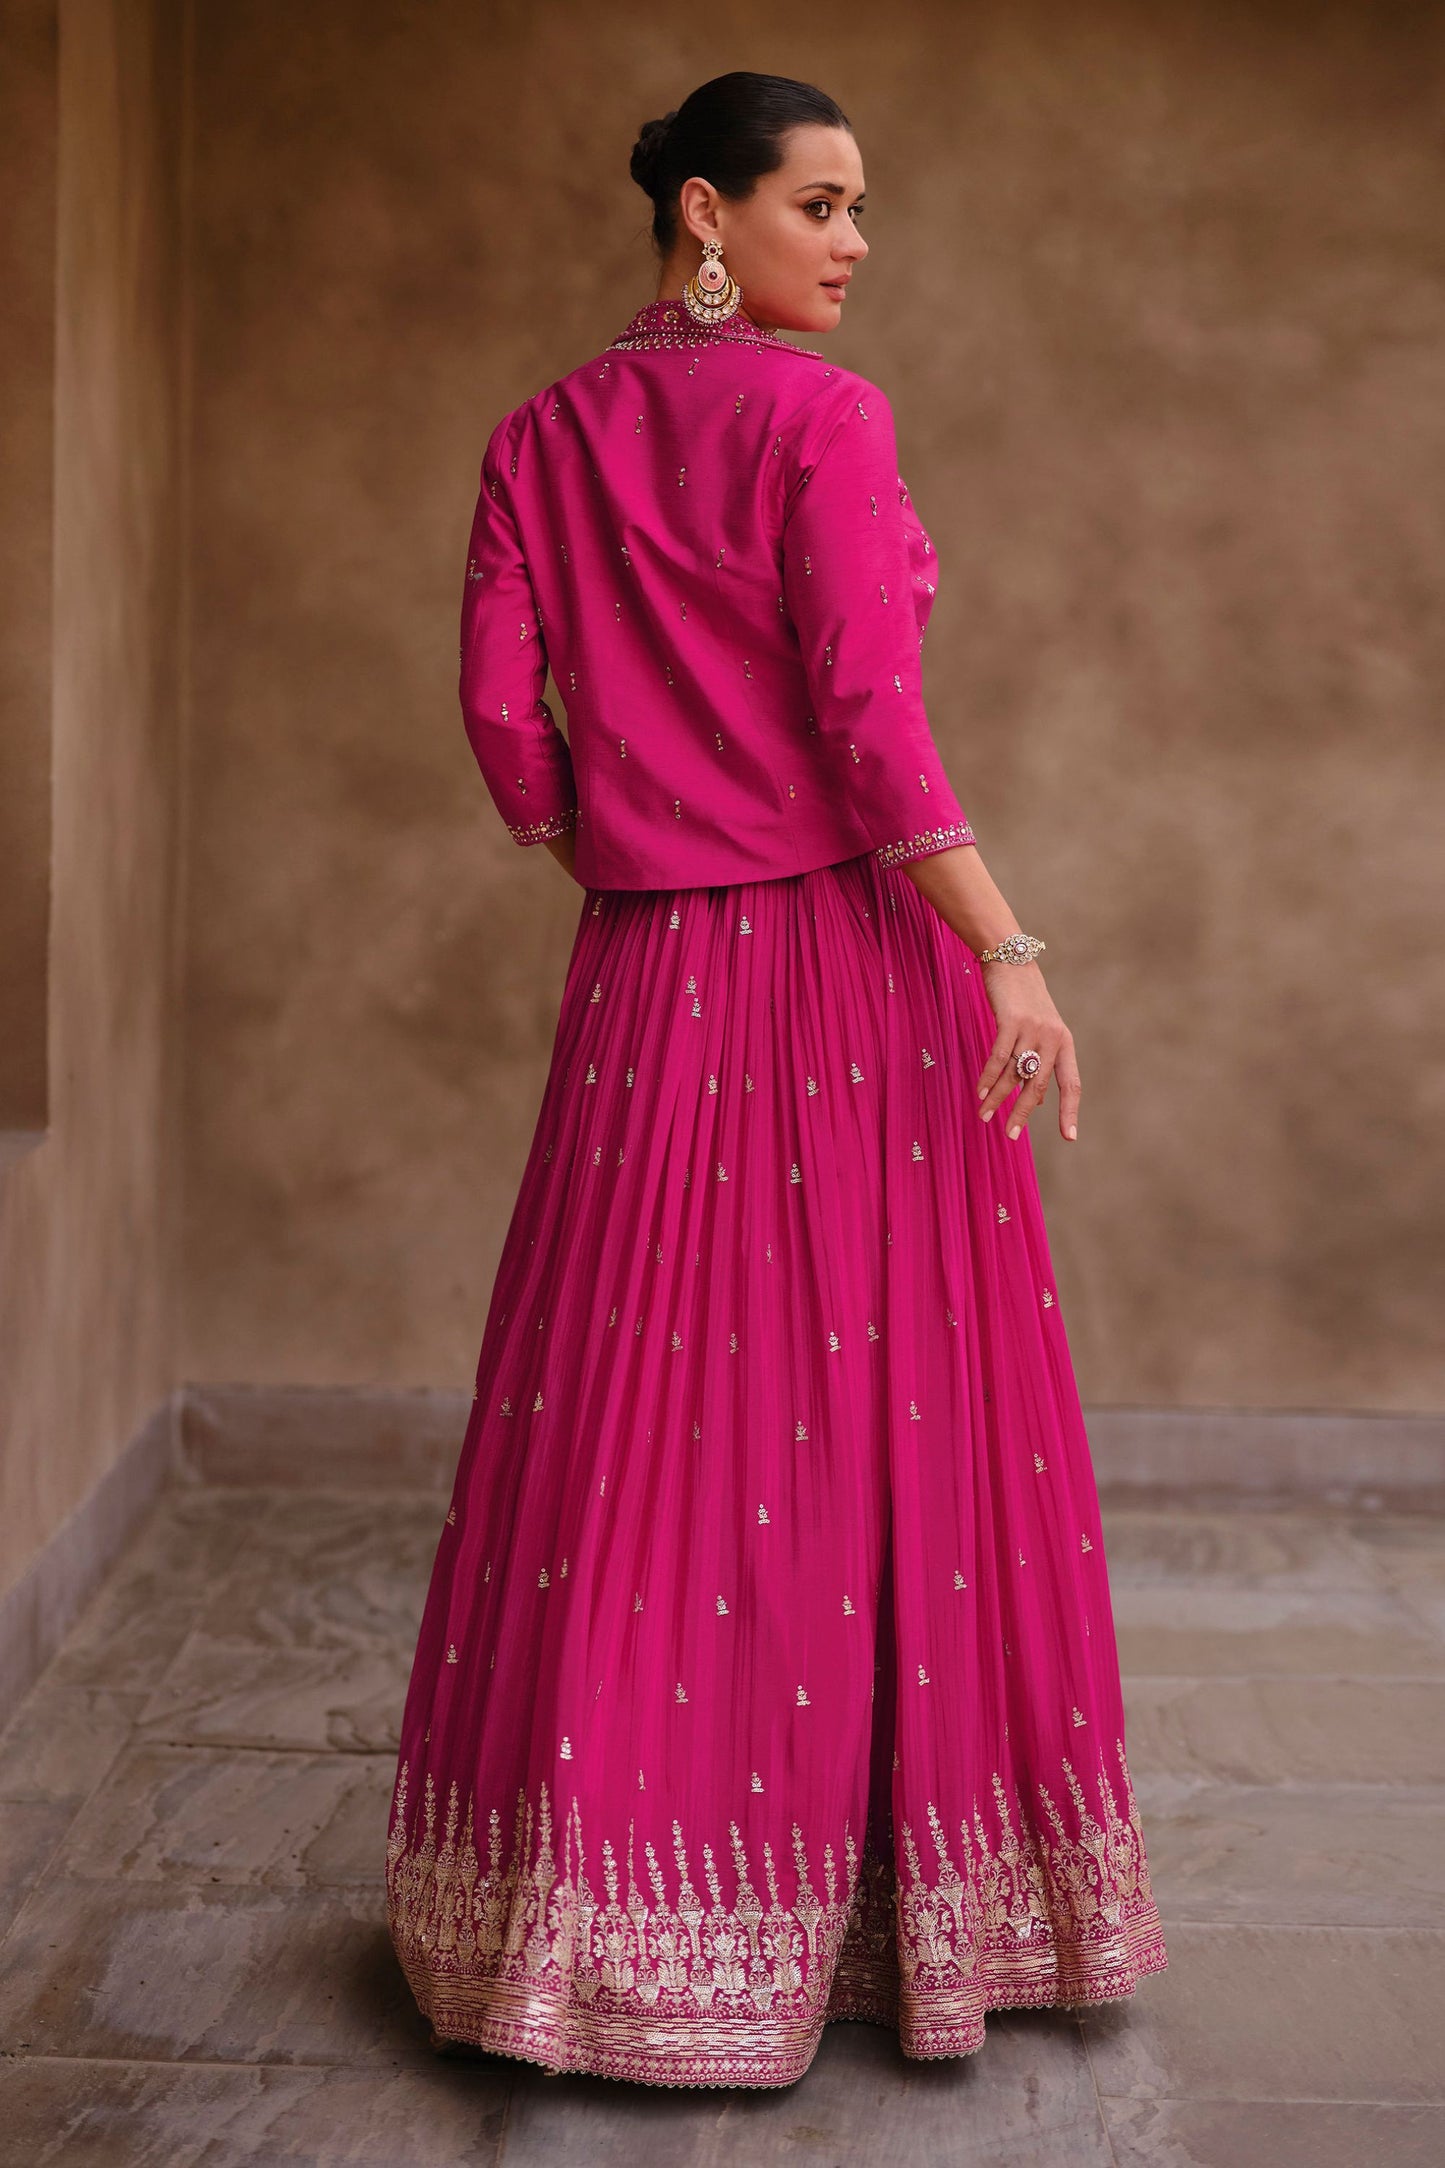 Pink Chinon Silk Lehenga Choli with Koti For Indian Festivals & Pakistani Weddings - Embroidery Work